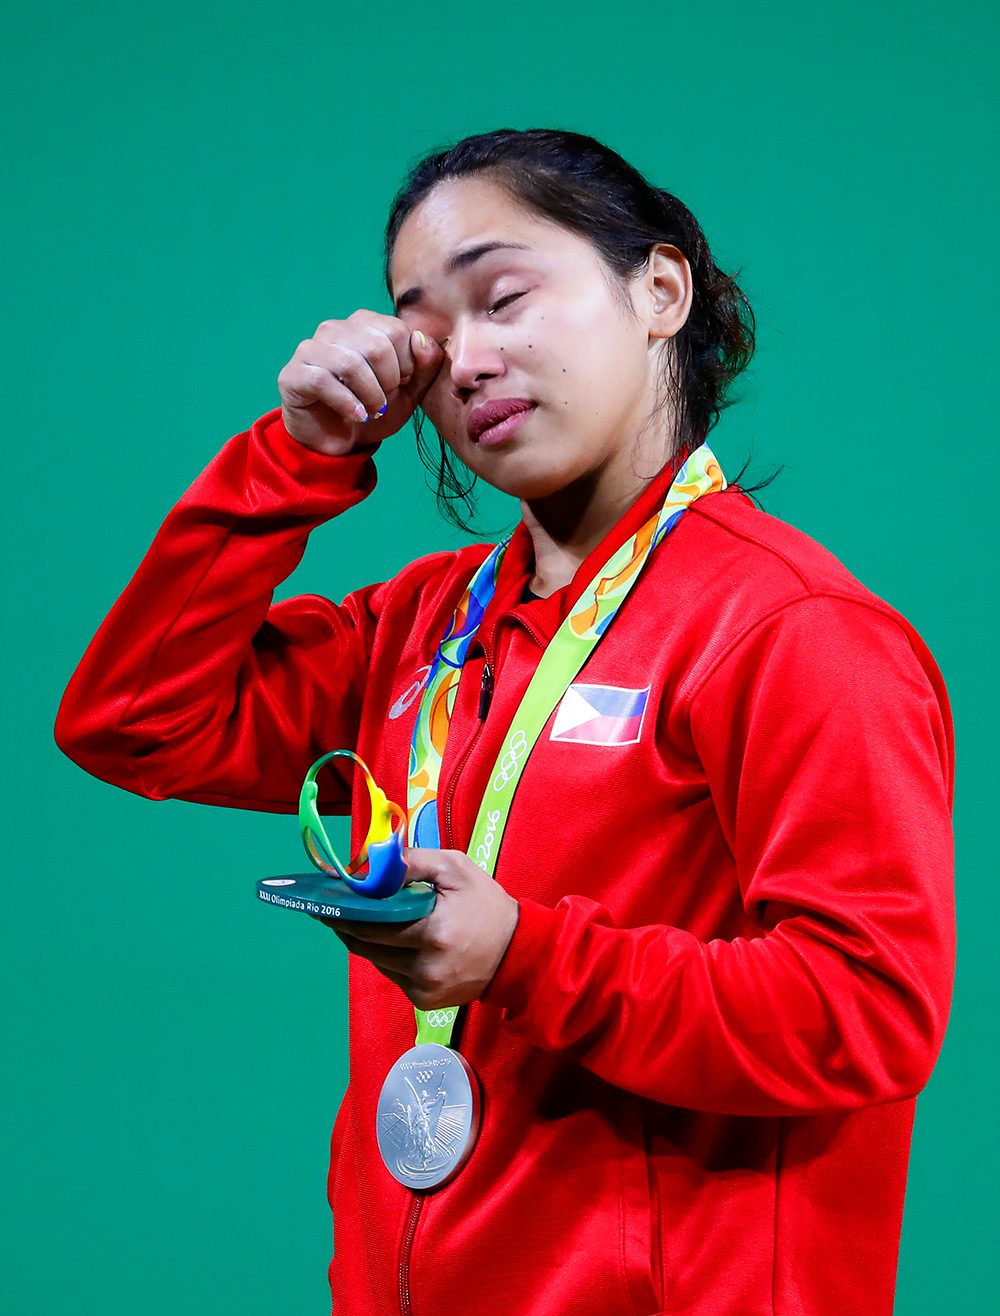 EMOTIONAL. Hidilyn Diaz can't help her emotion at the podium. EPA/NIC BOTHMA 